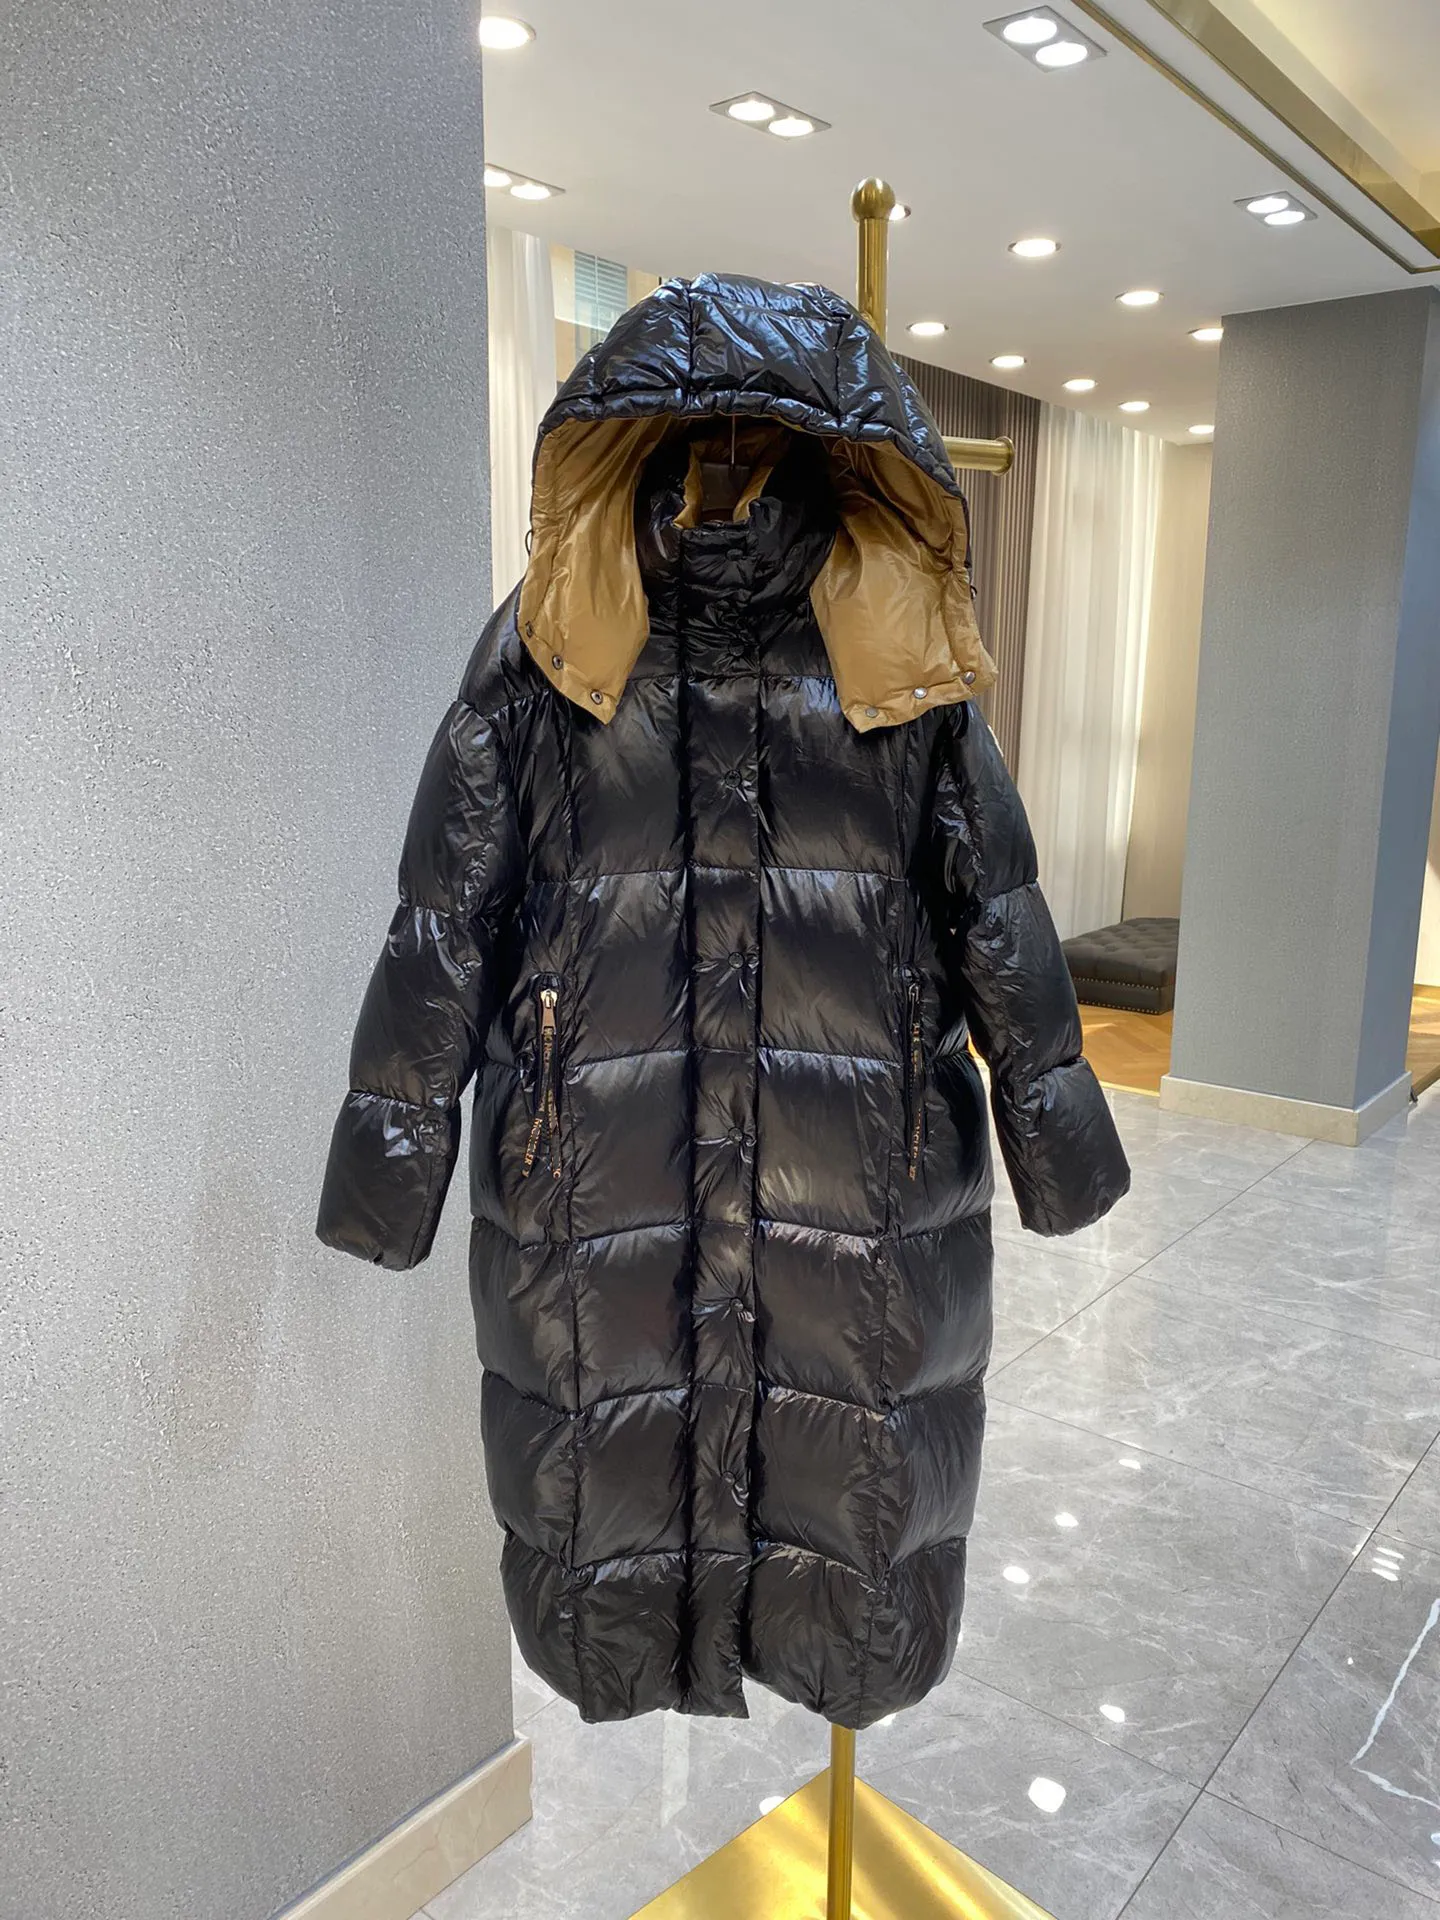 Fashion's Women's Down Parkas Men Carta de invierno Impresi￳n Poplar chaqueta Monclair Dise￱ador c￡lido con capucha Casa Lpadded abrigo